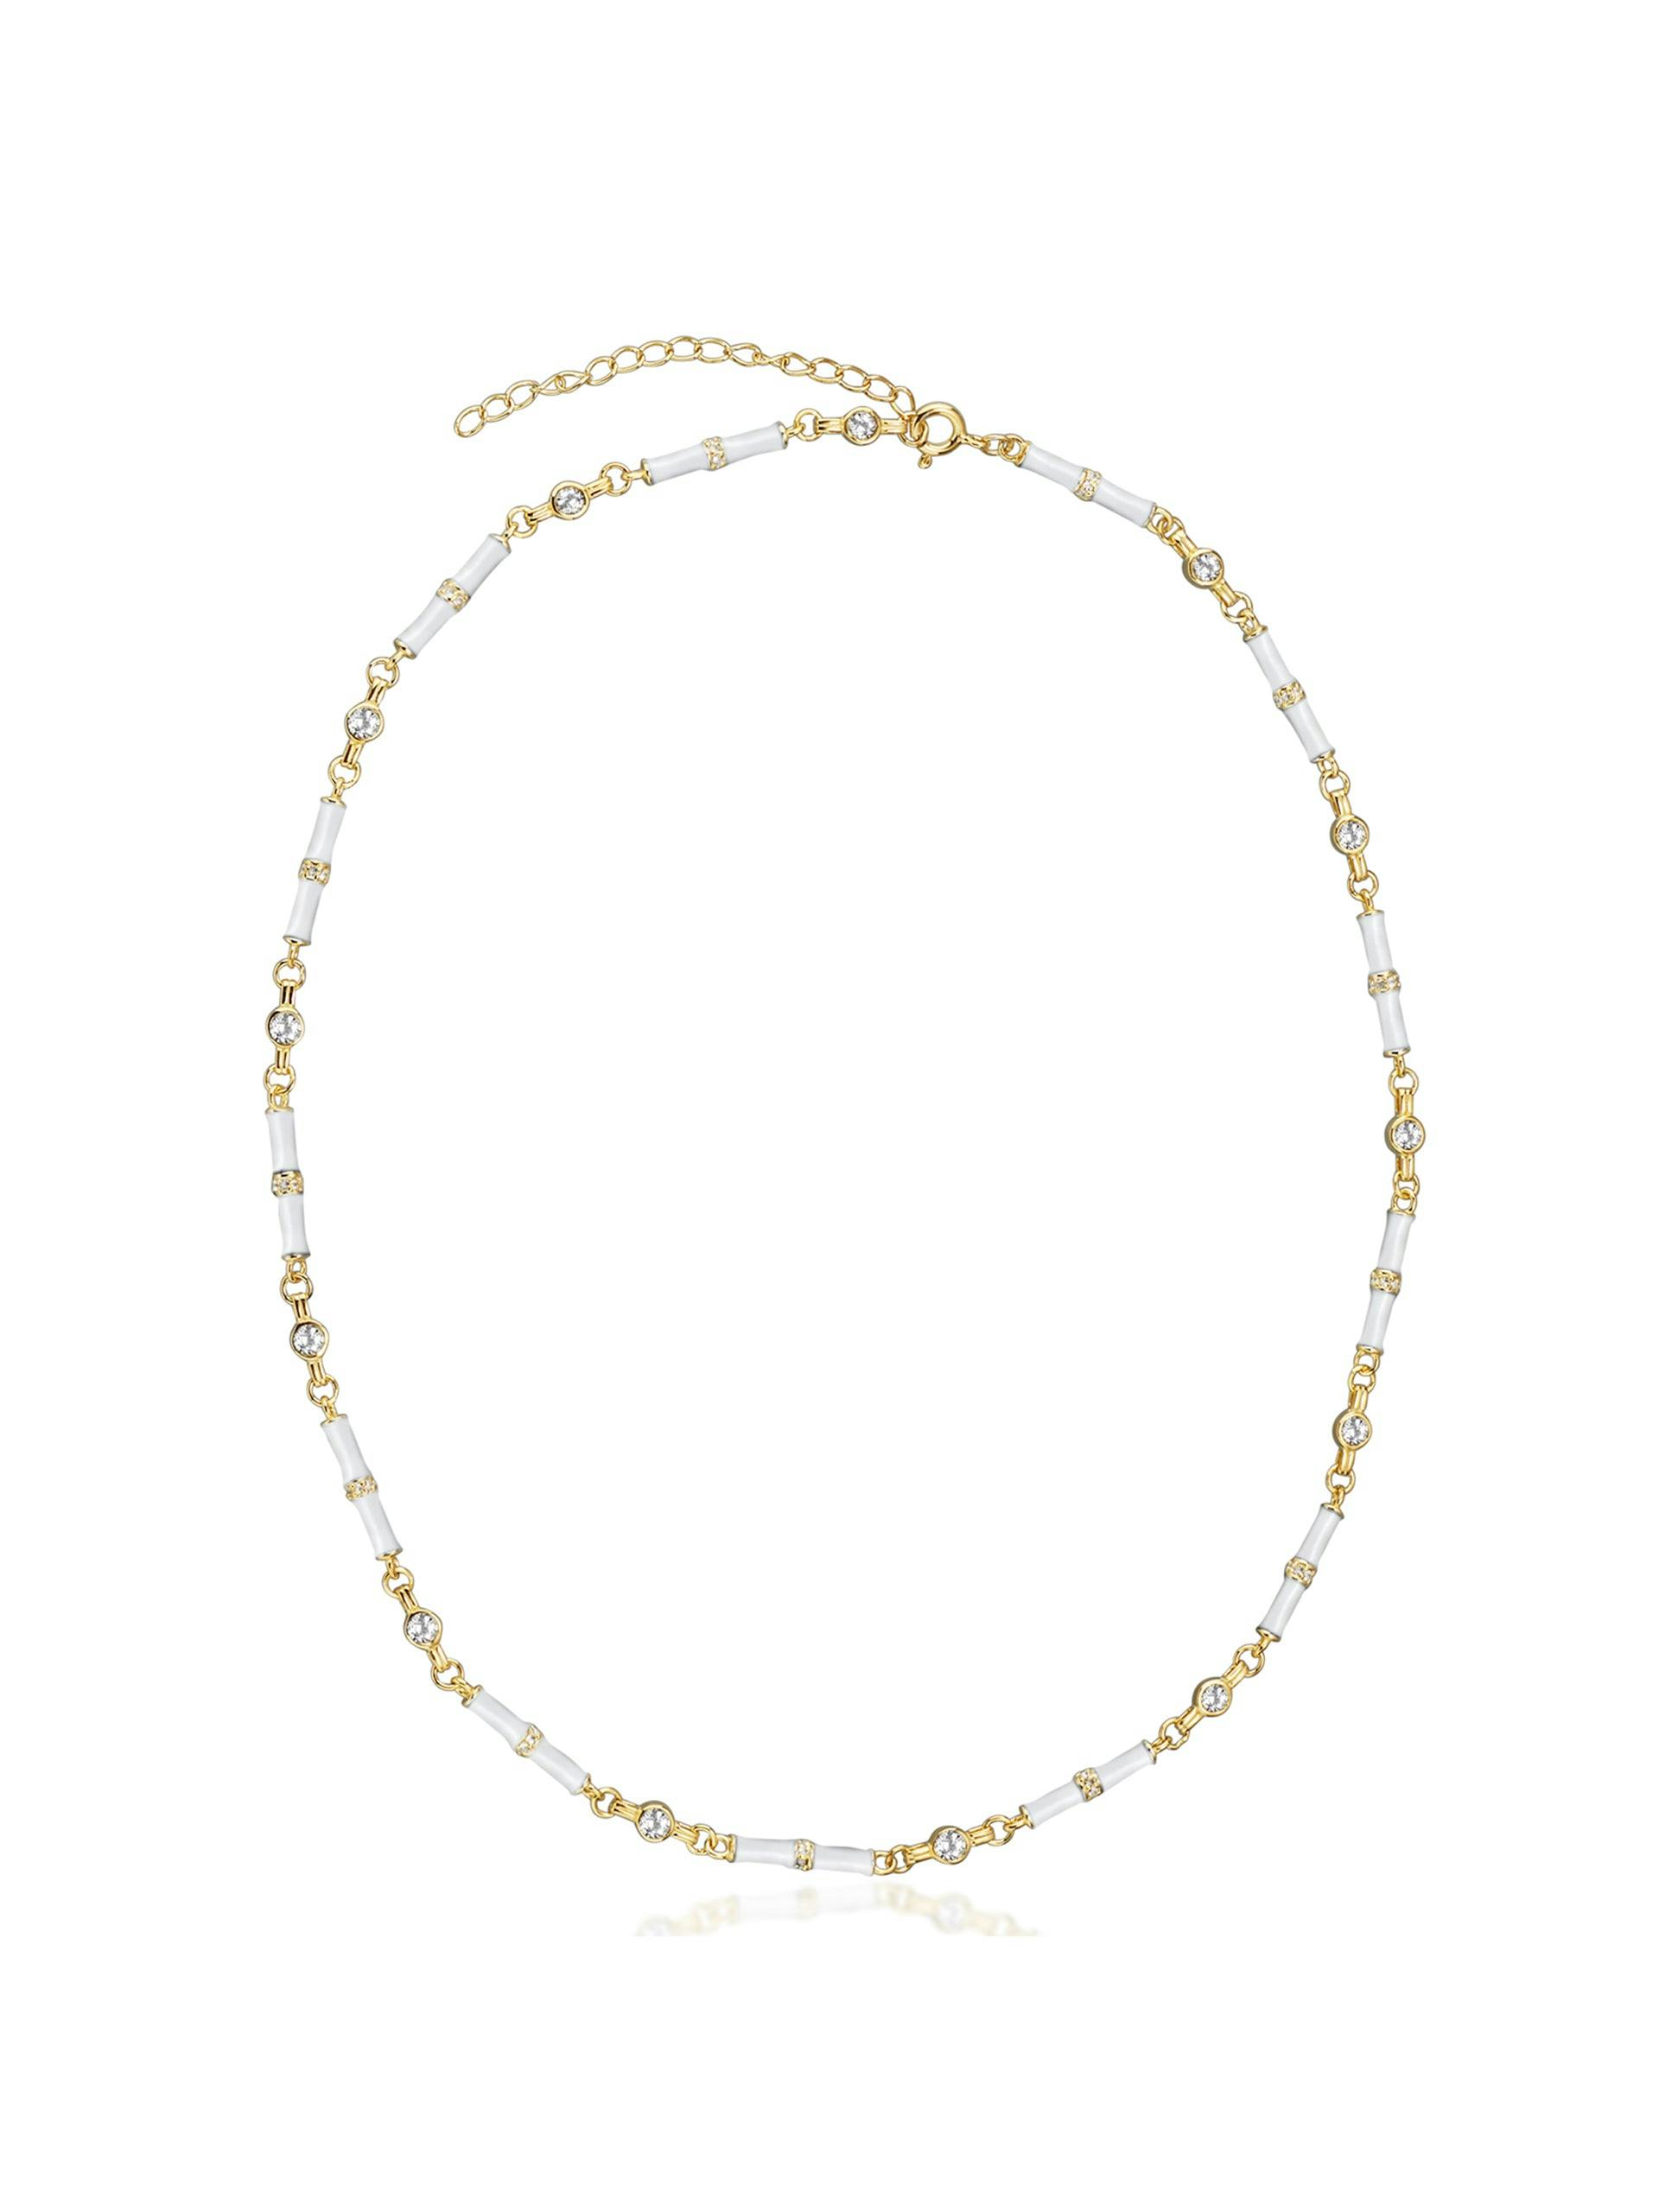 Marlowe white enamel necklace with white topaz